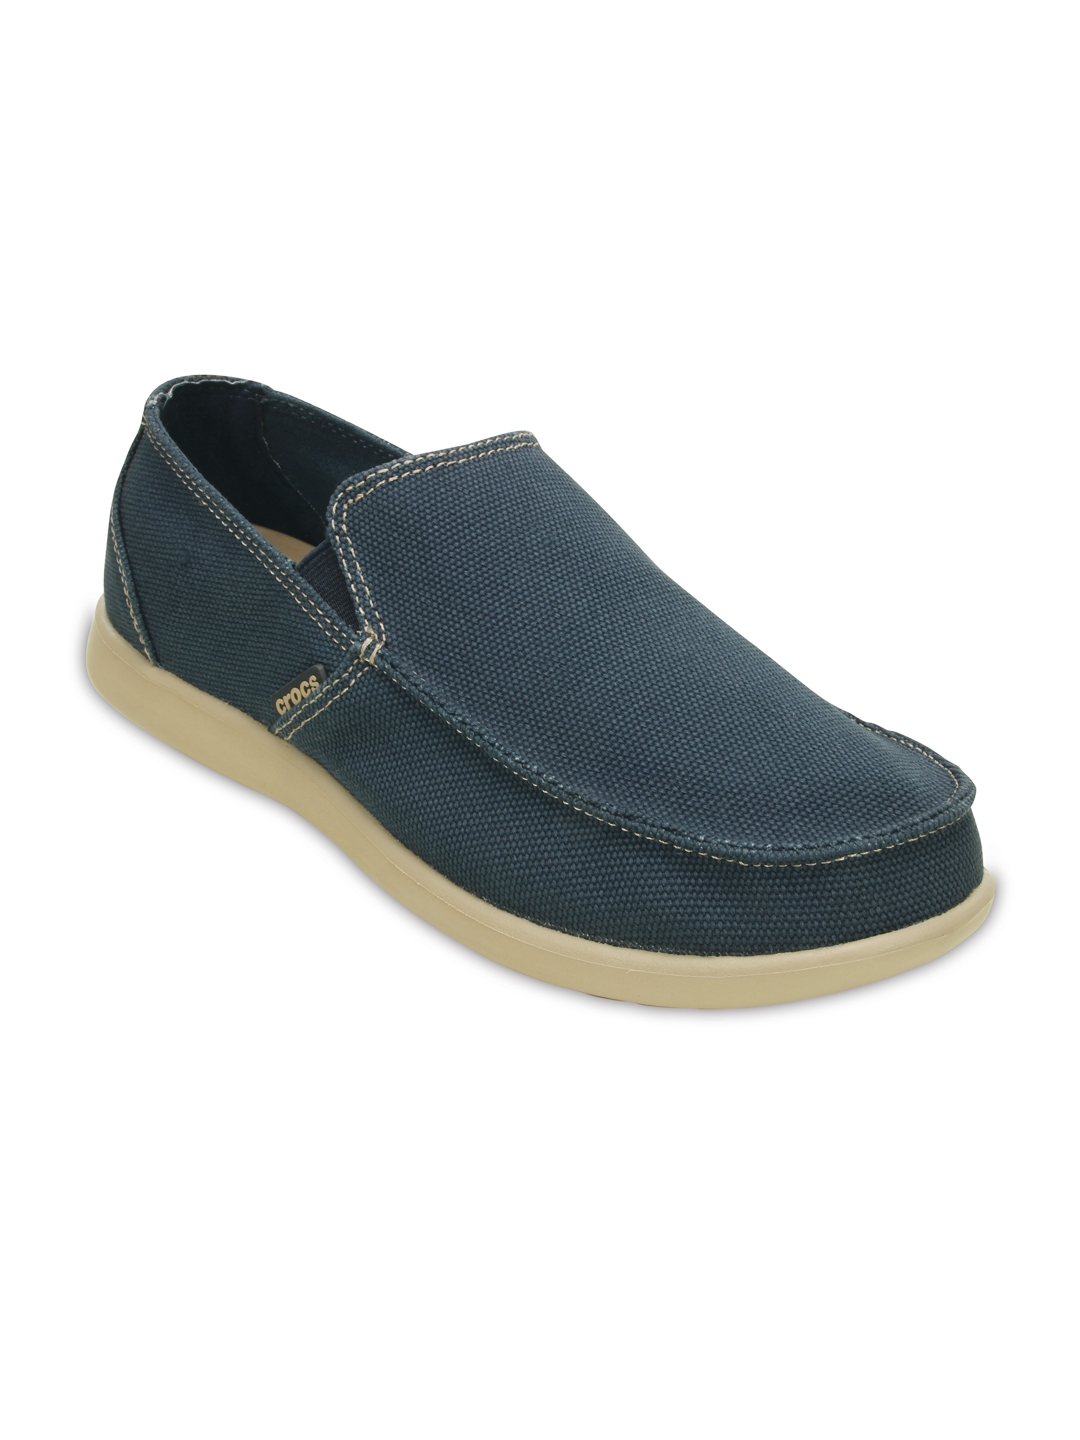 Buy Crocs Santa Cruz Men Navy Casual Shoes - Casual Shoes for Men ...